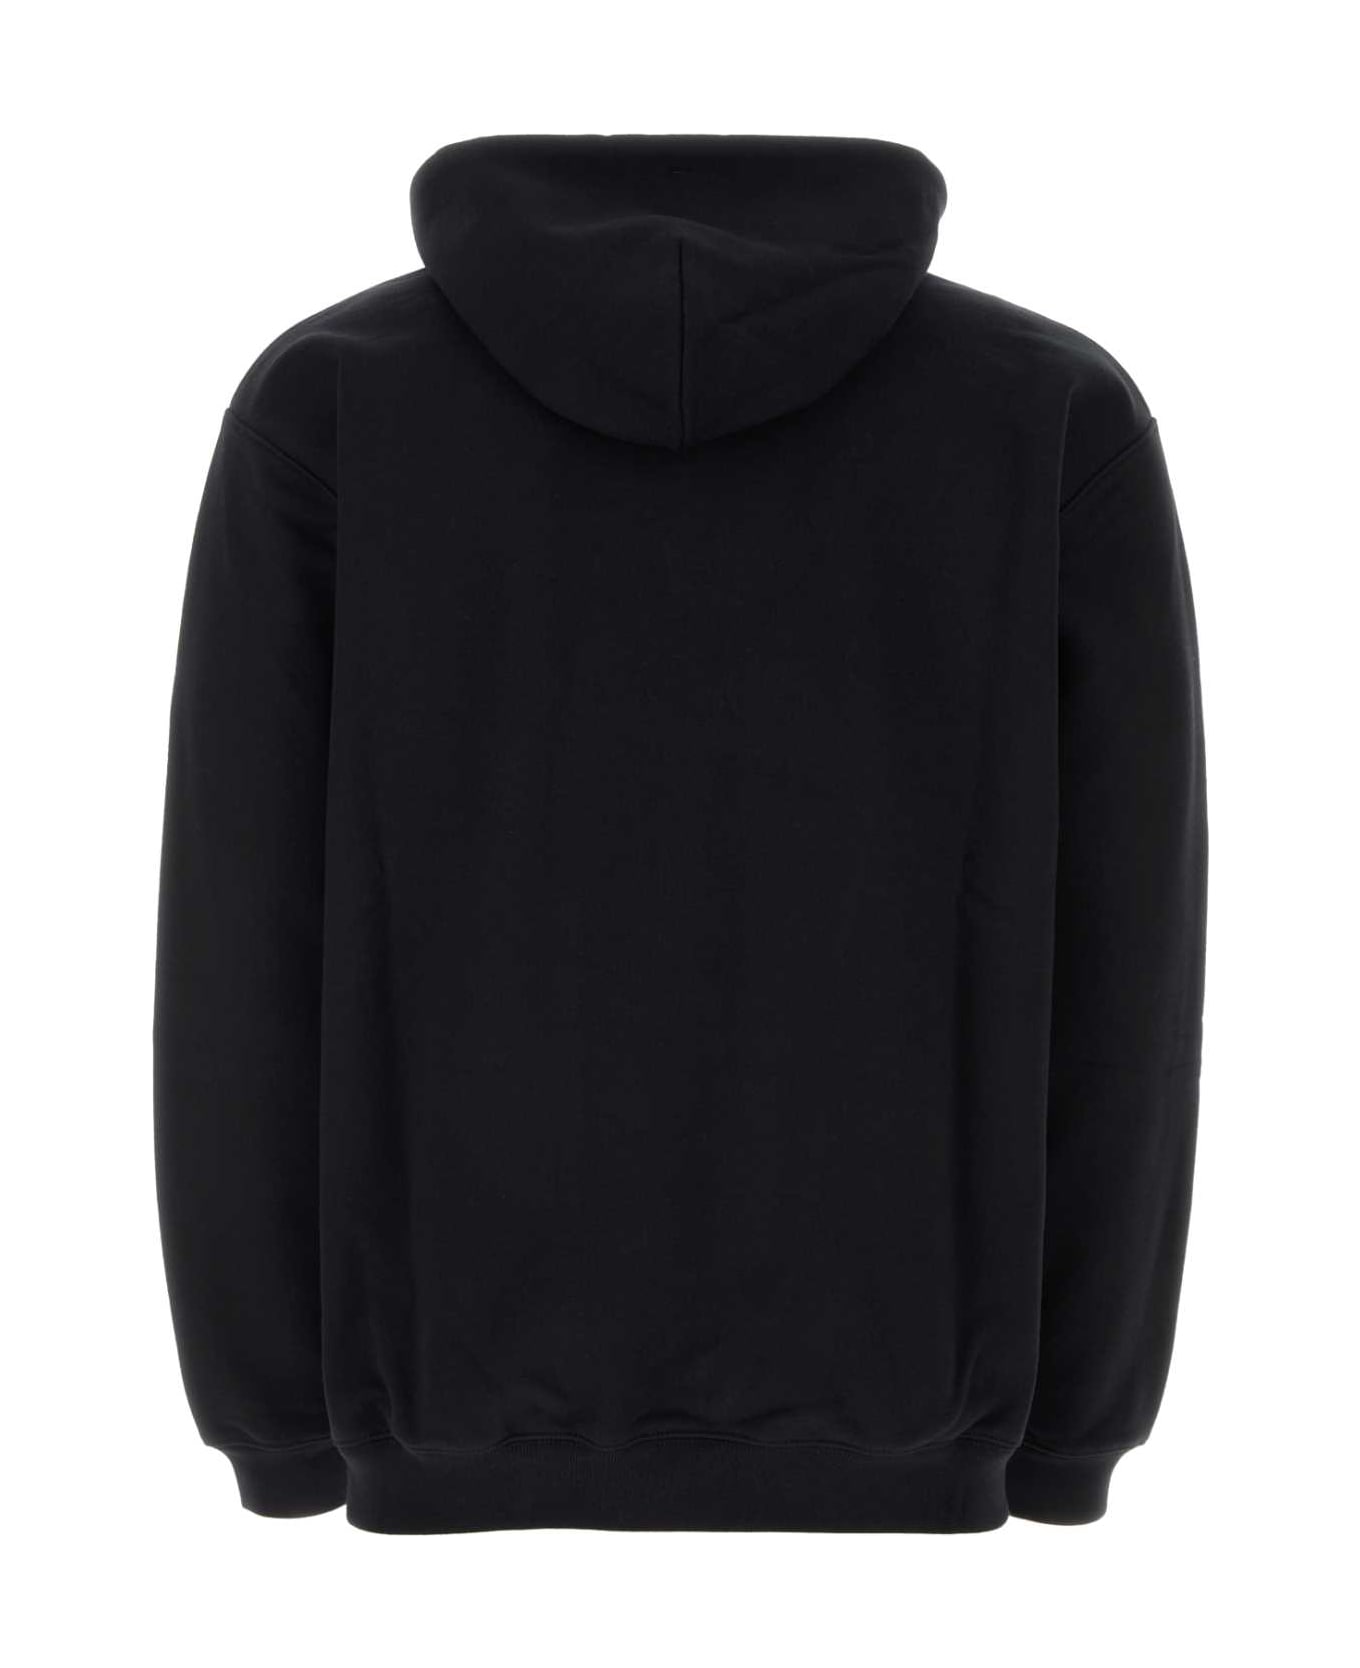 VTMNTS Black Cotton Blend Sweatshirt - Black